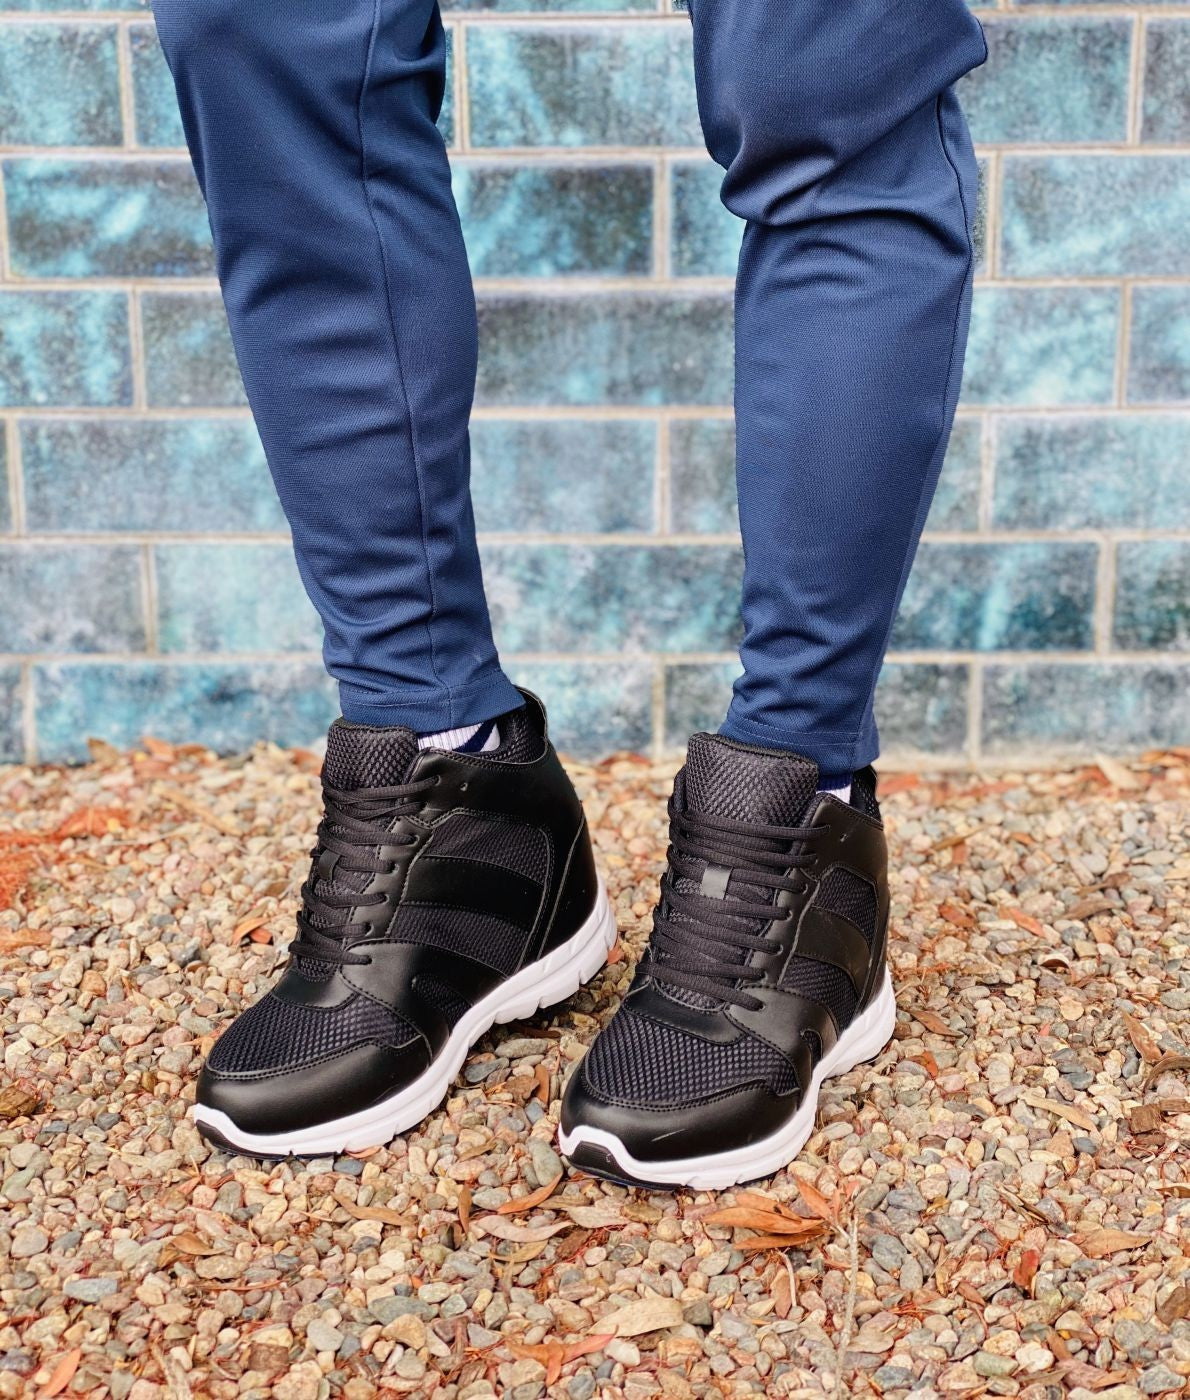 Elevator shoes height increase CALTO 4-Inch Taller Men's Black Elevator Sneakers